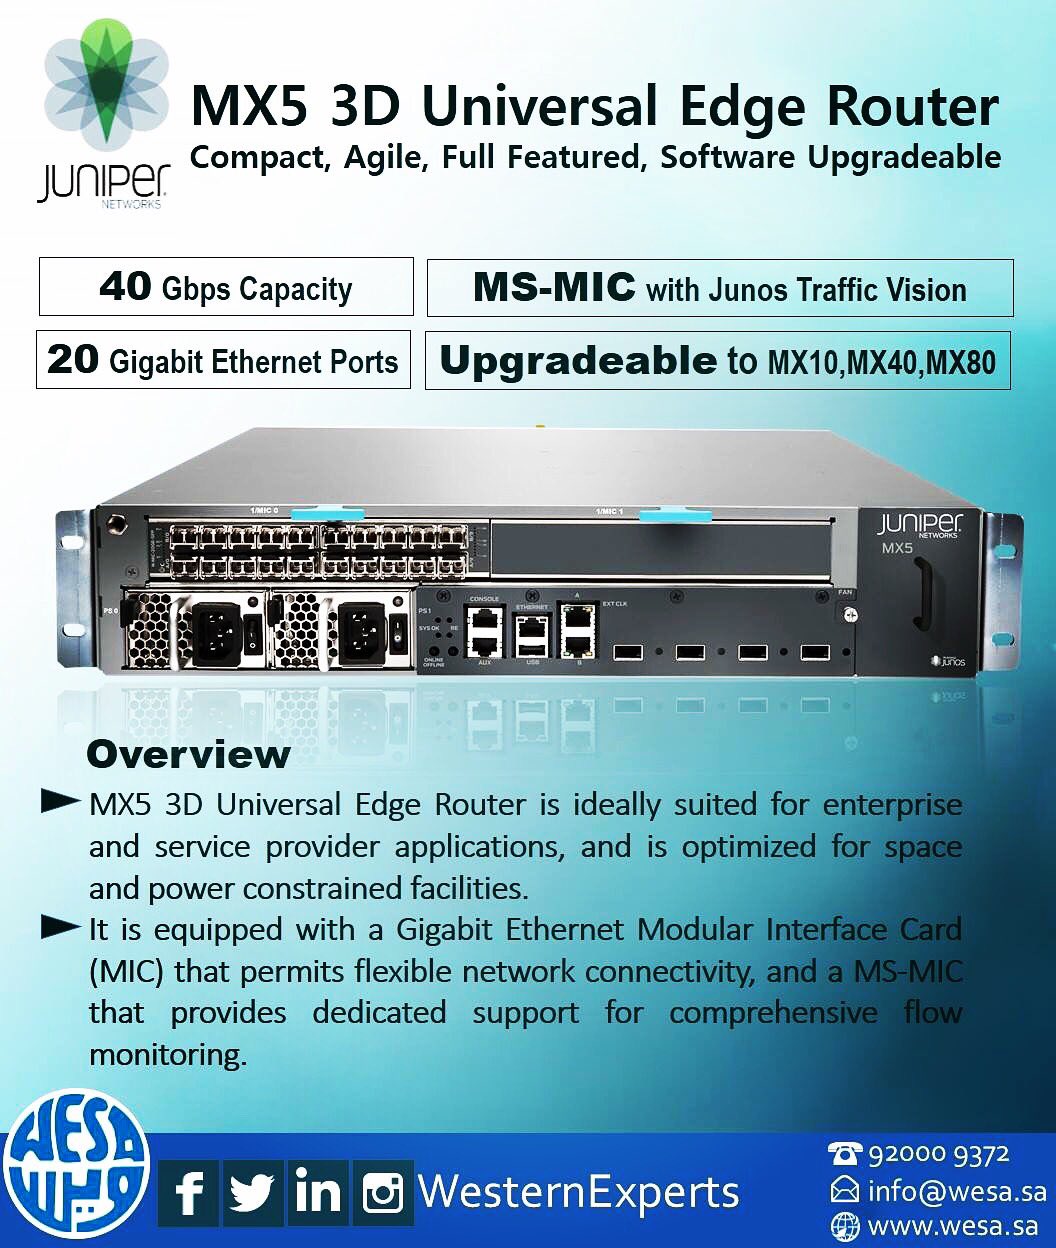 ويسا - WESA on Twitter: "Juniper Networks MX5 3D Universal Edge Router  Compact, agile, full featured, software upgradeable. #WESA,  #westernexperts, #junipernetworks, #networkrouter, #networkswitches  https://t.co/fYQUzY0FGv https://t.co/jwt0SQco2Z https ...